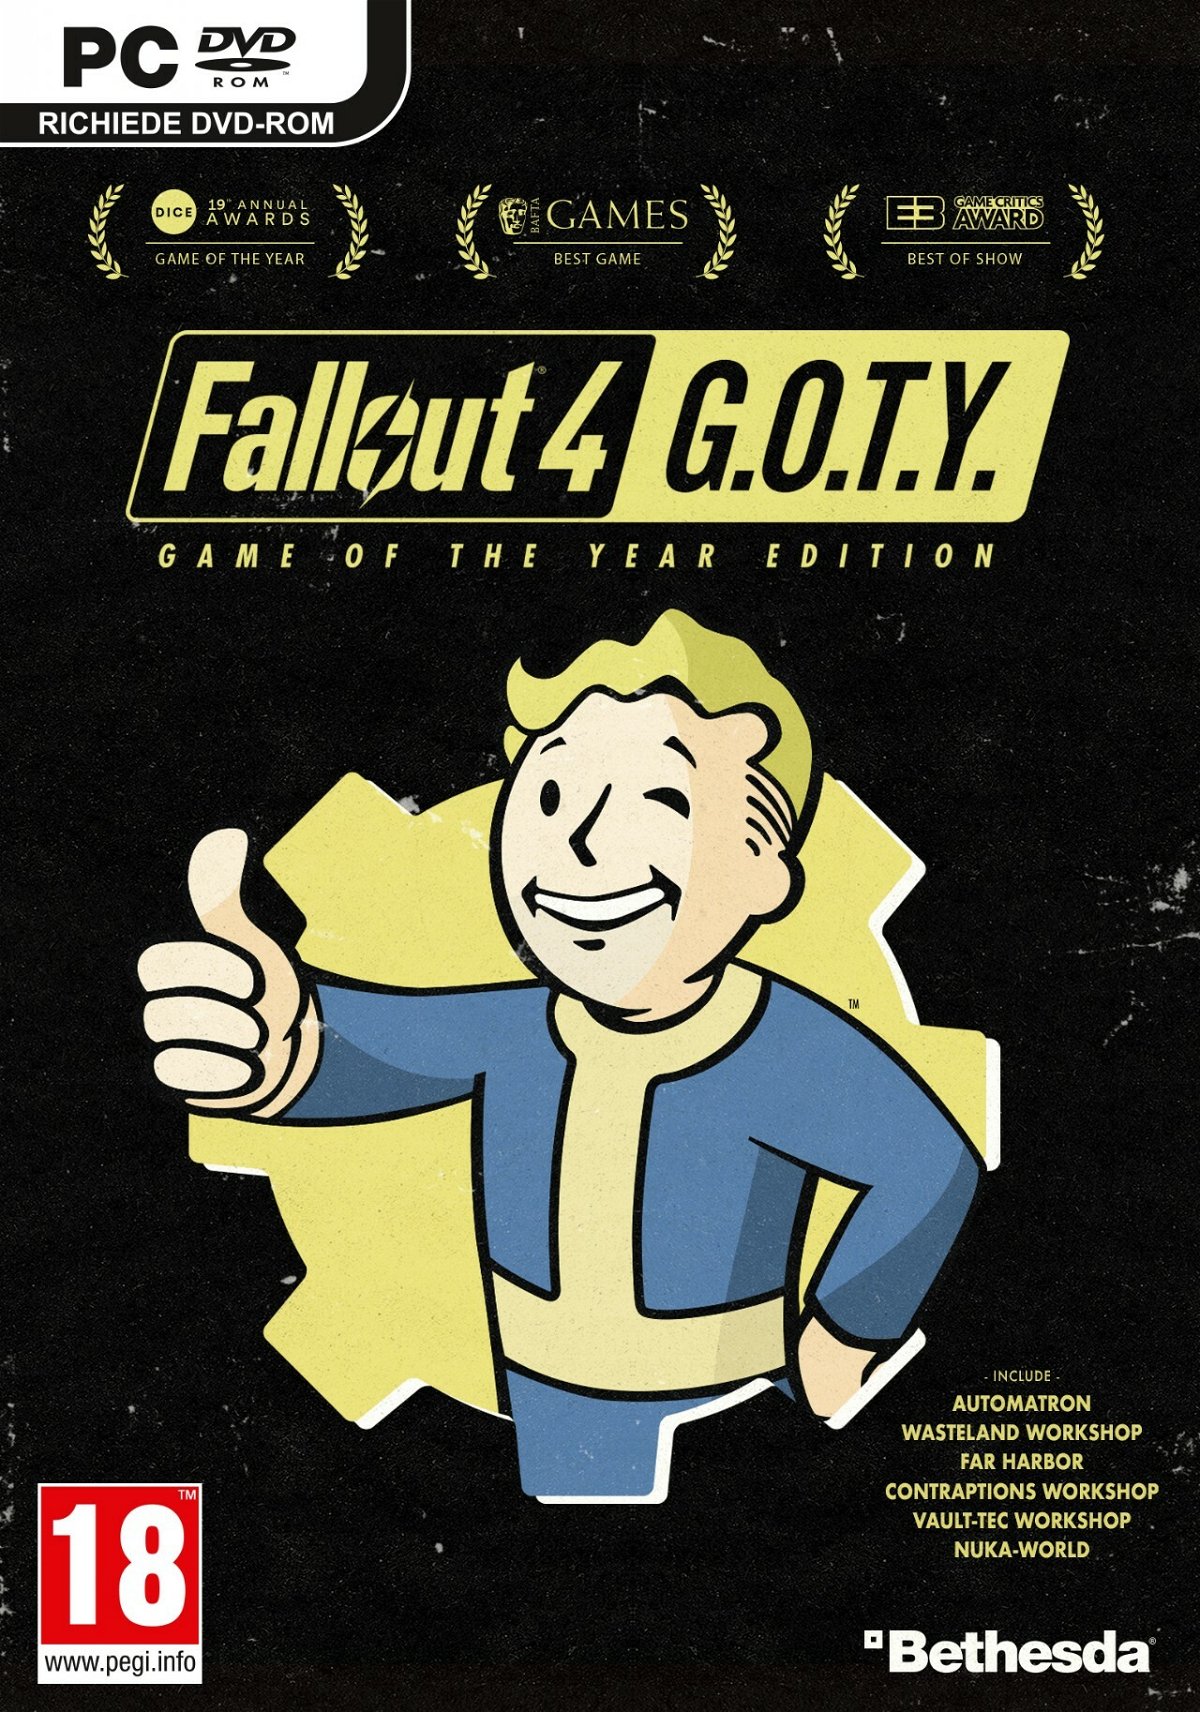 La Game of the Year Edition di Fallout 4